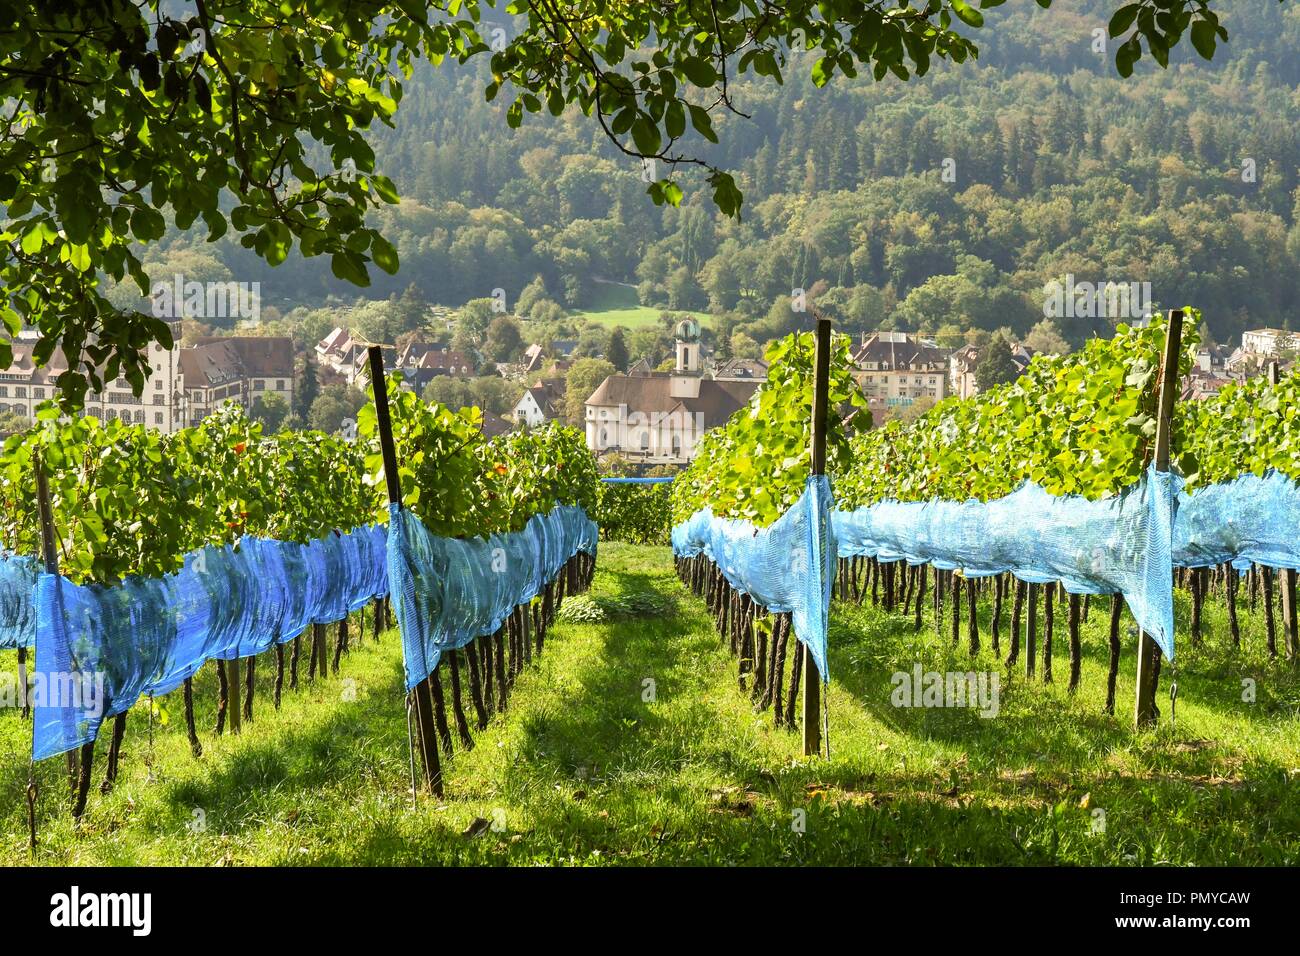 Freiburg vineyards, vineyards covered with netting on the hillsides surrounding the city of Freiburg Im Breisgau,  Germany, Stock Photo